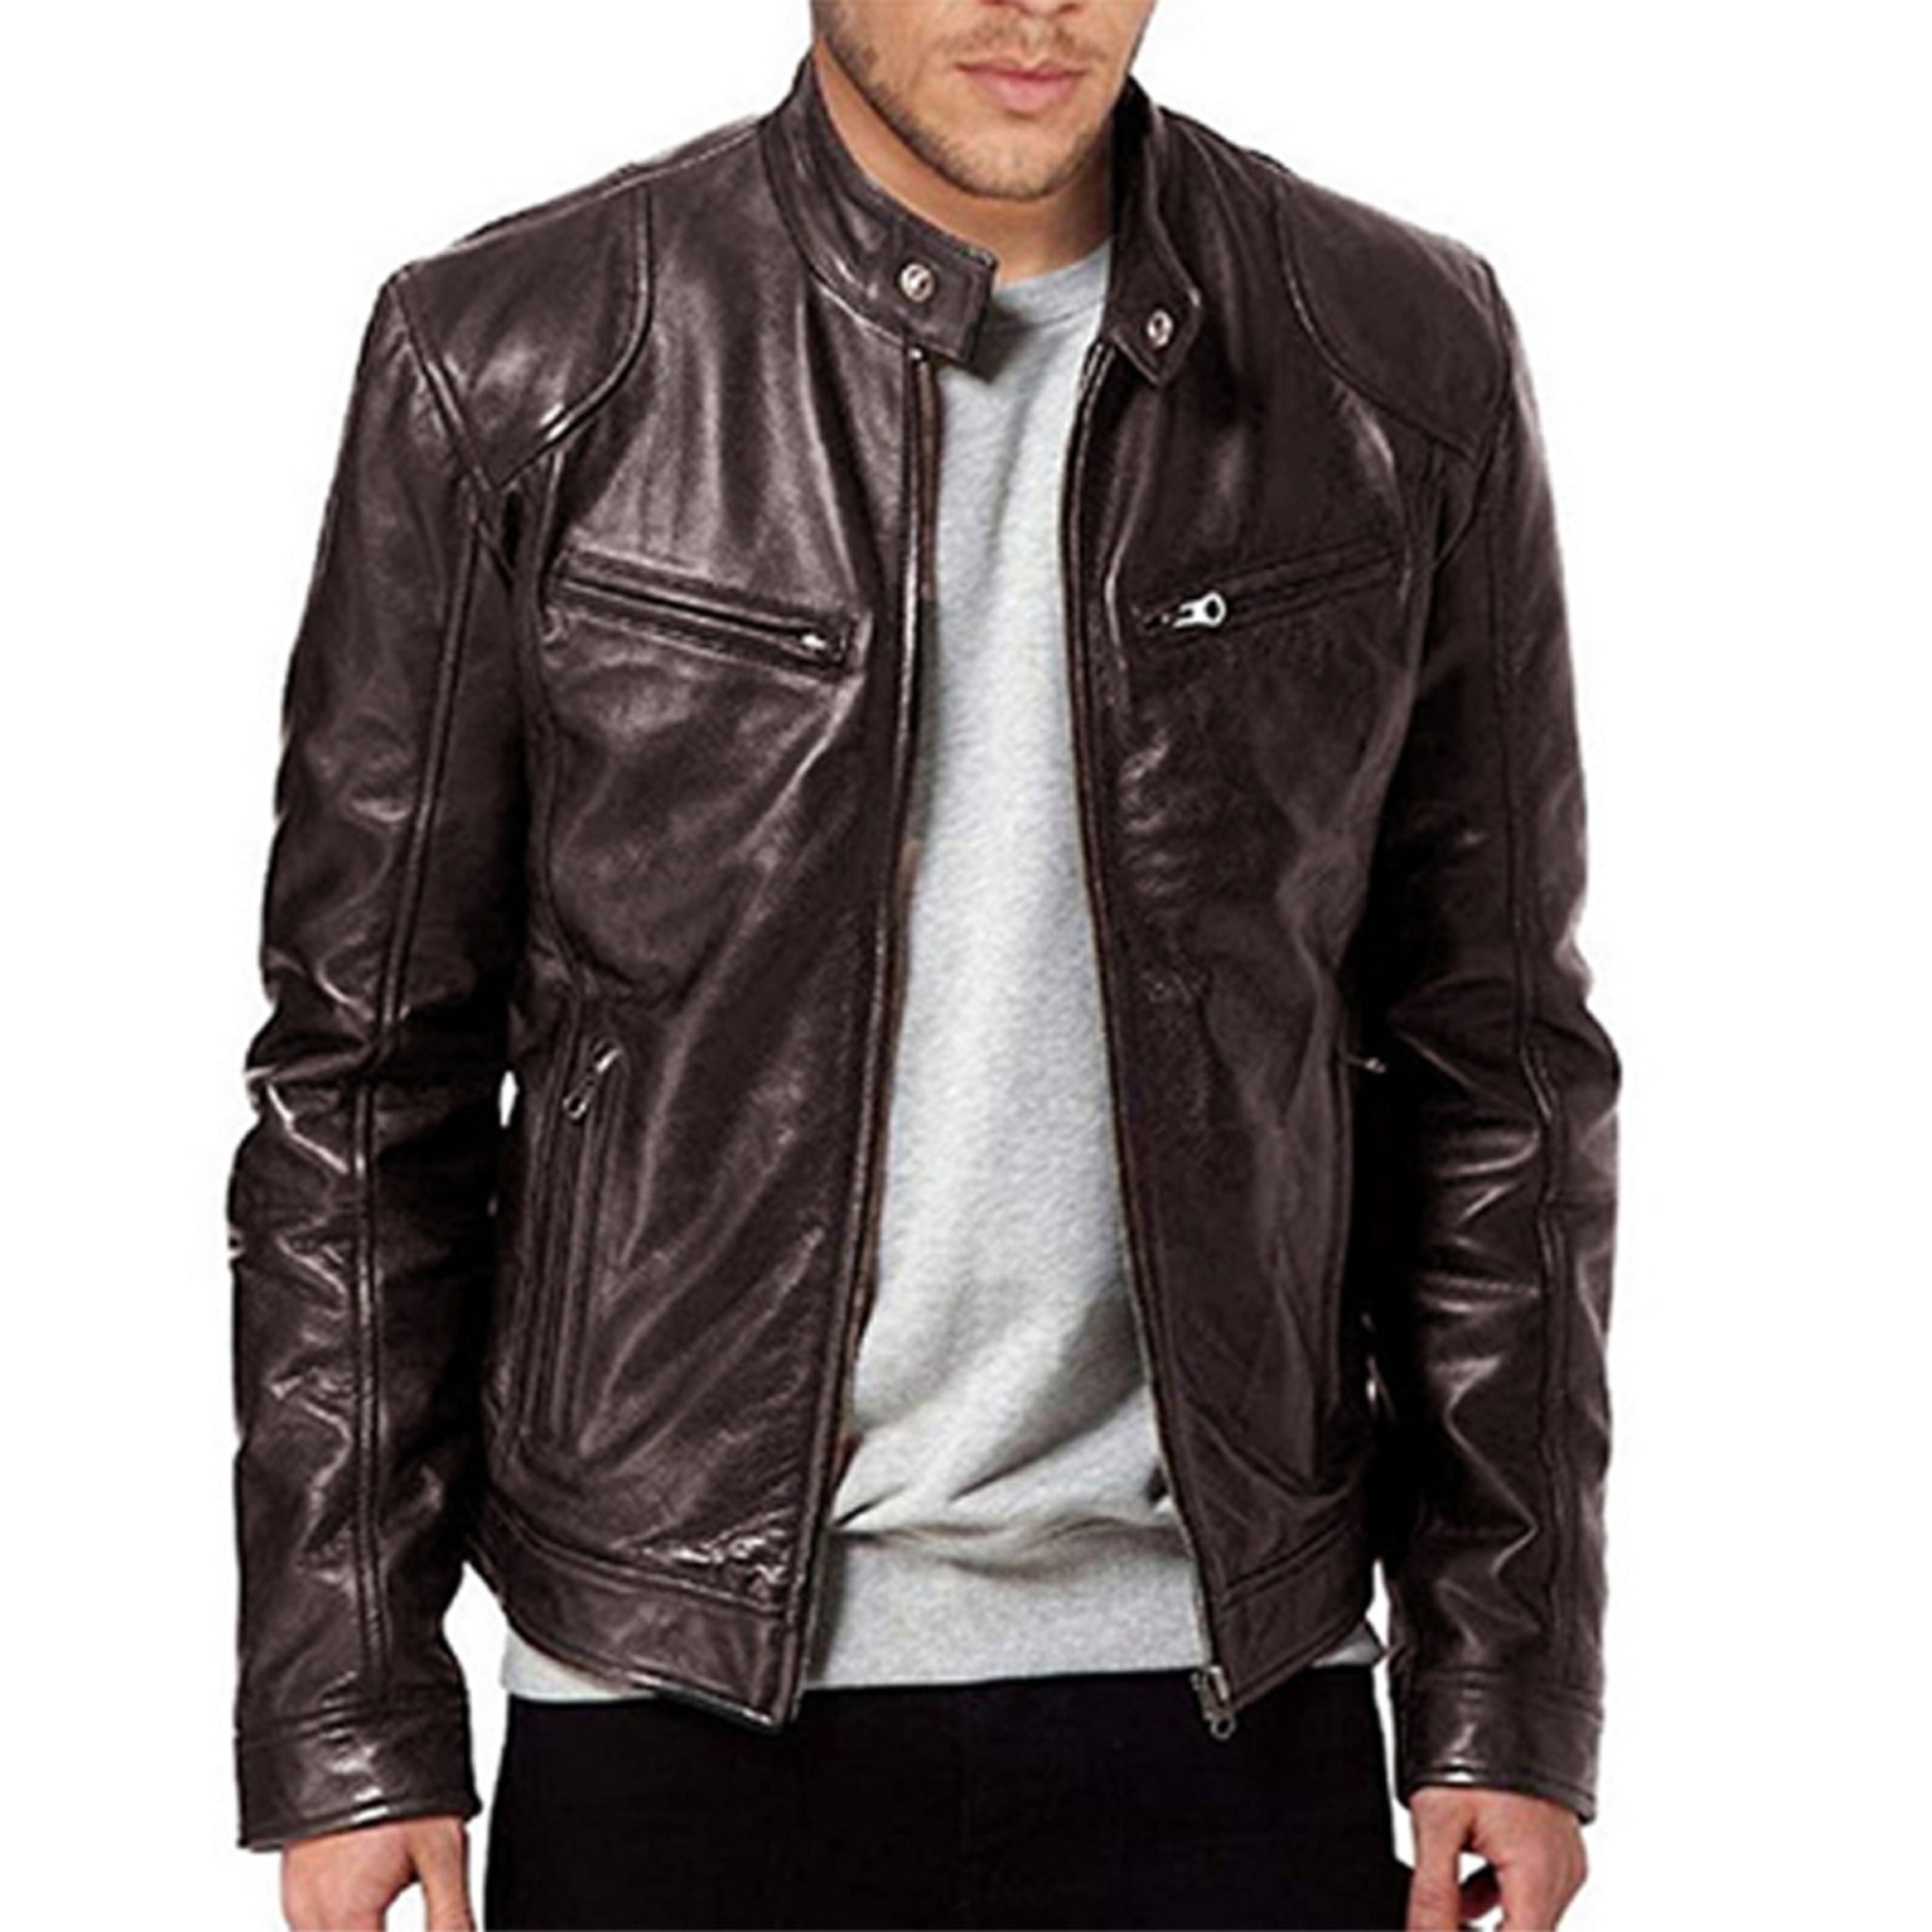 Fashion Varsity Baseball Jacket for Men Bomber Jacket Multi-pocketed Windbreaker Lightweight Premium Jackets Outdoors